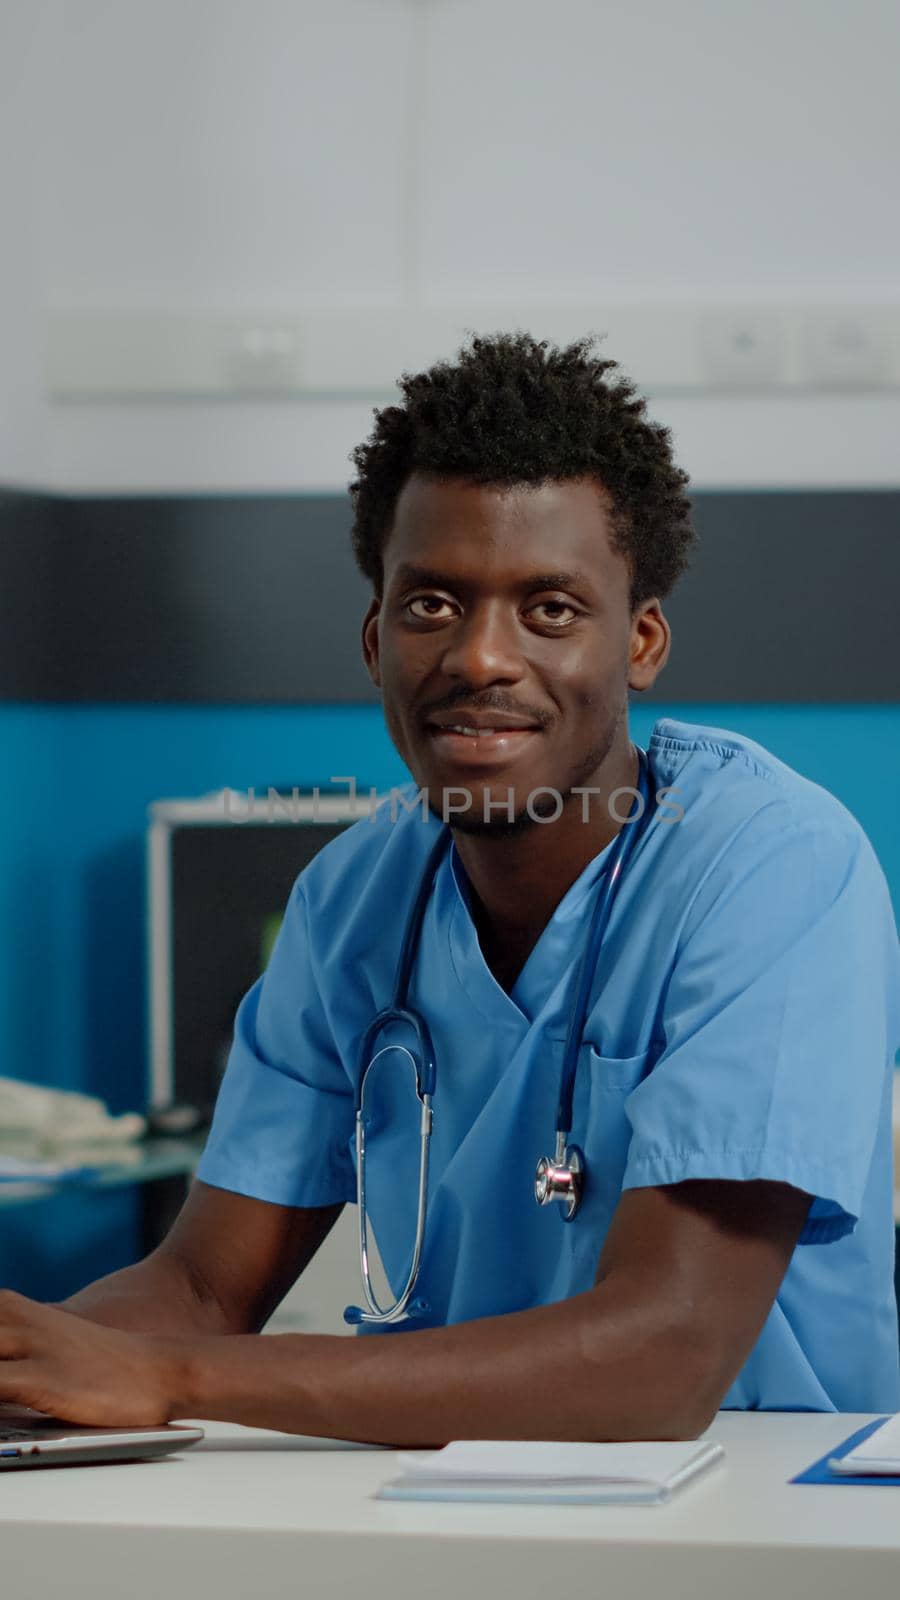 Portrait of male nurse with uniform and stethoscope by DCStudio